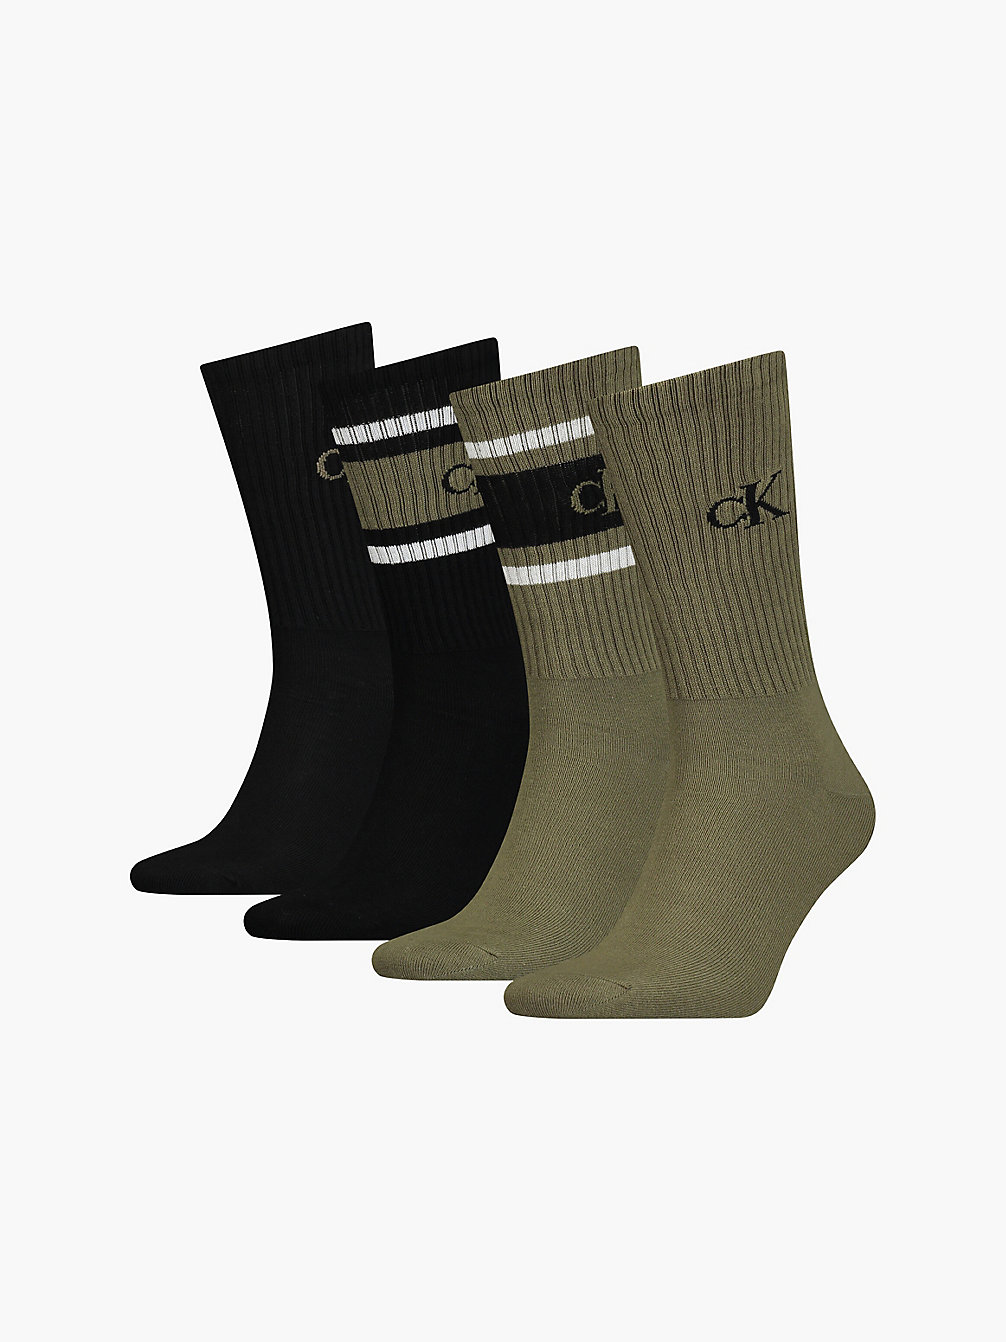 OLIVE COMBO 4 Pack Crew Socks Gift Set undefined men Calvin Klein